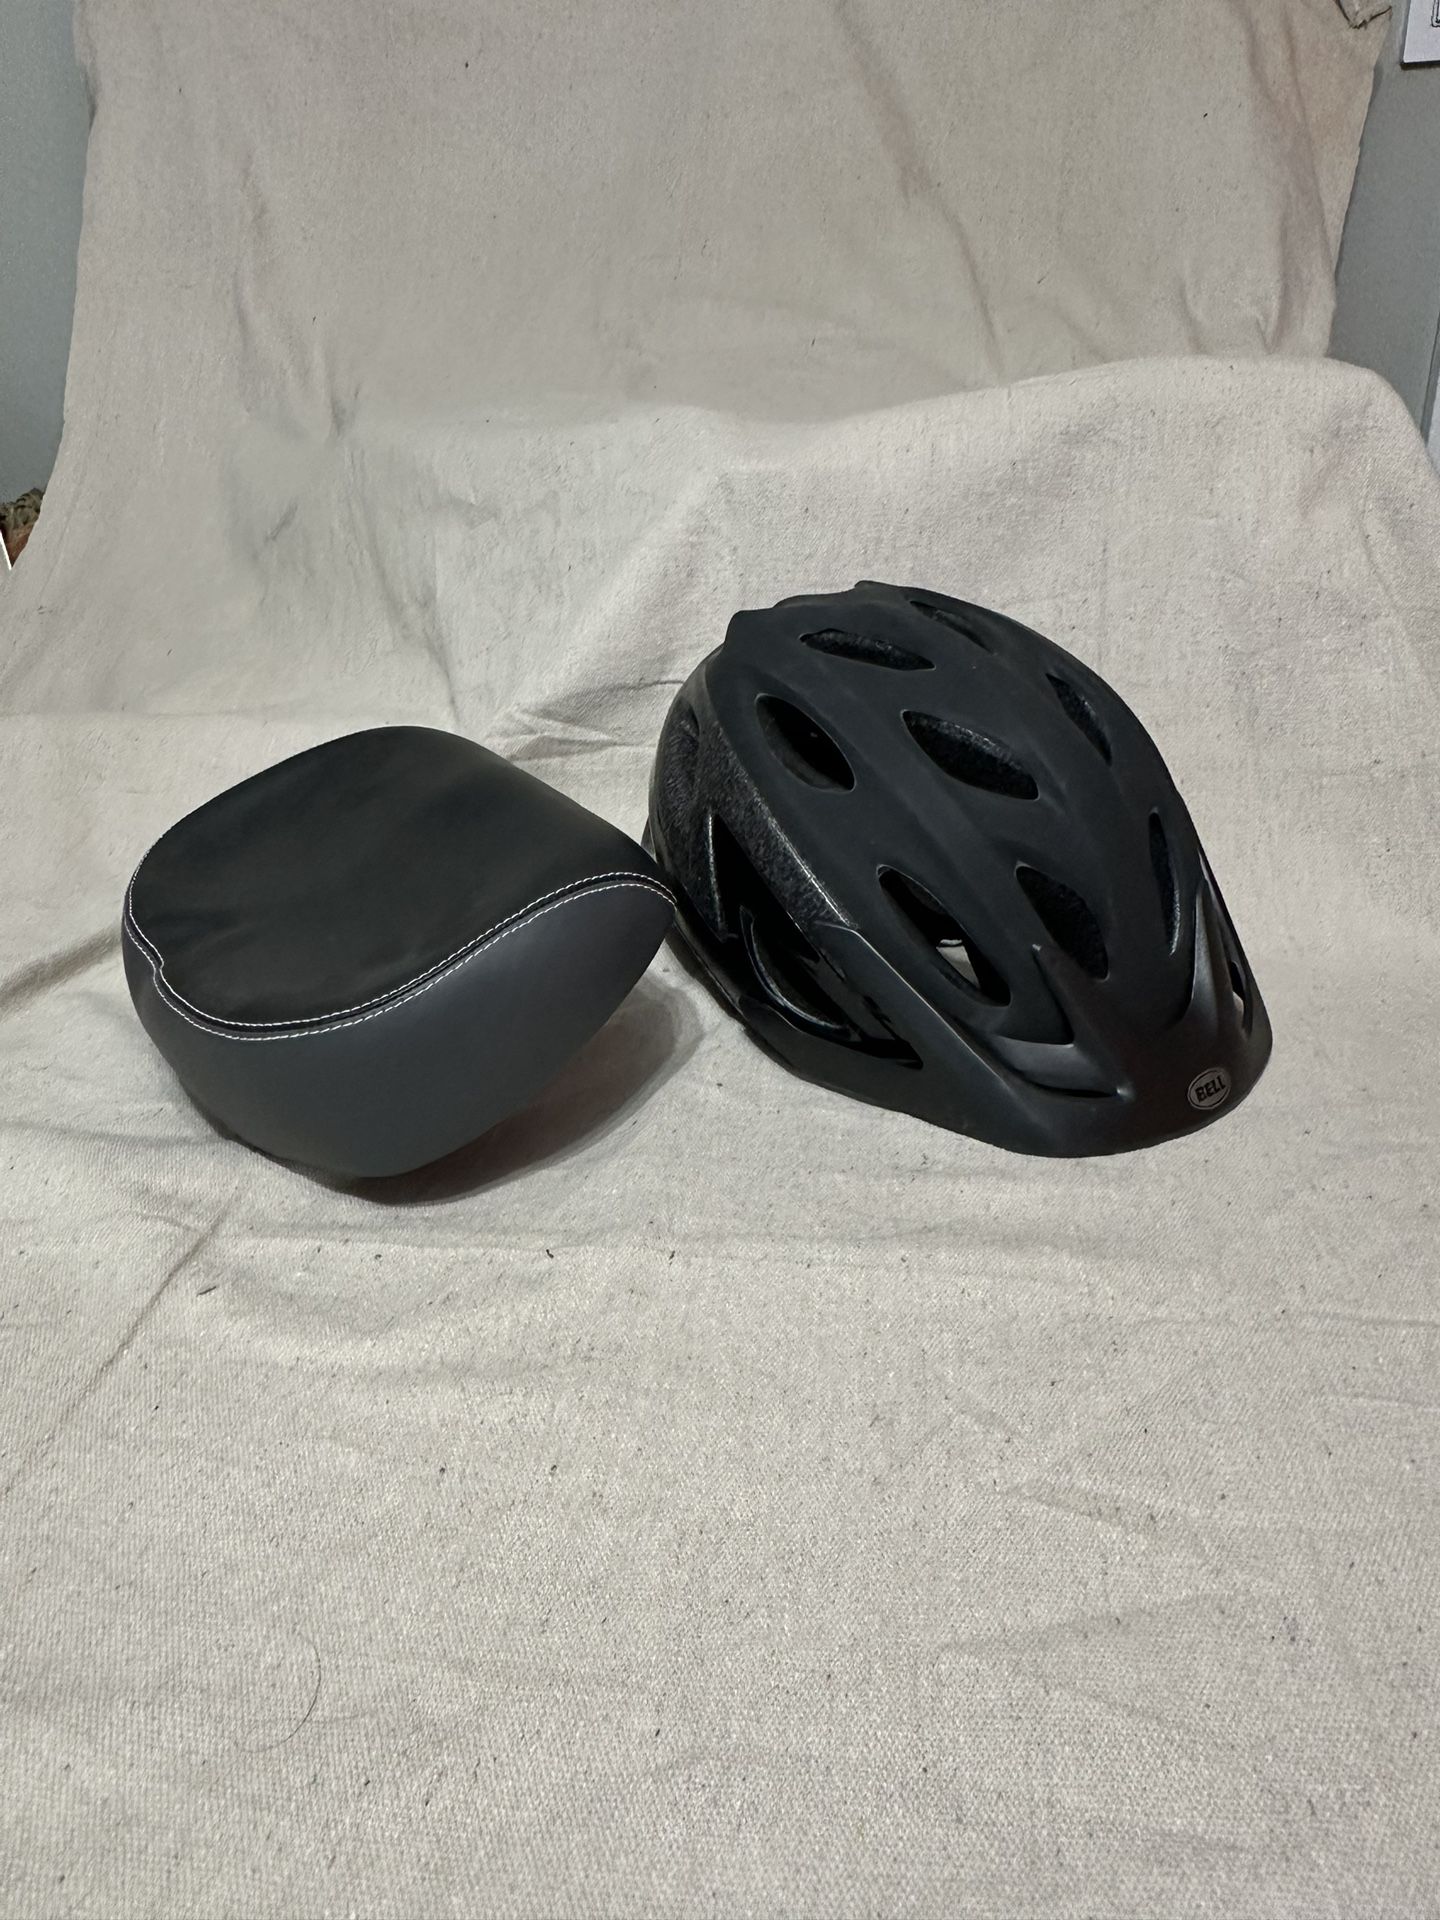 Bike Helmet & Bike Seat Combo